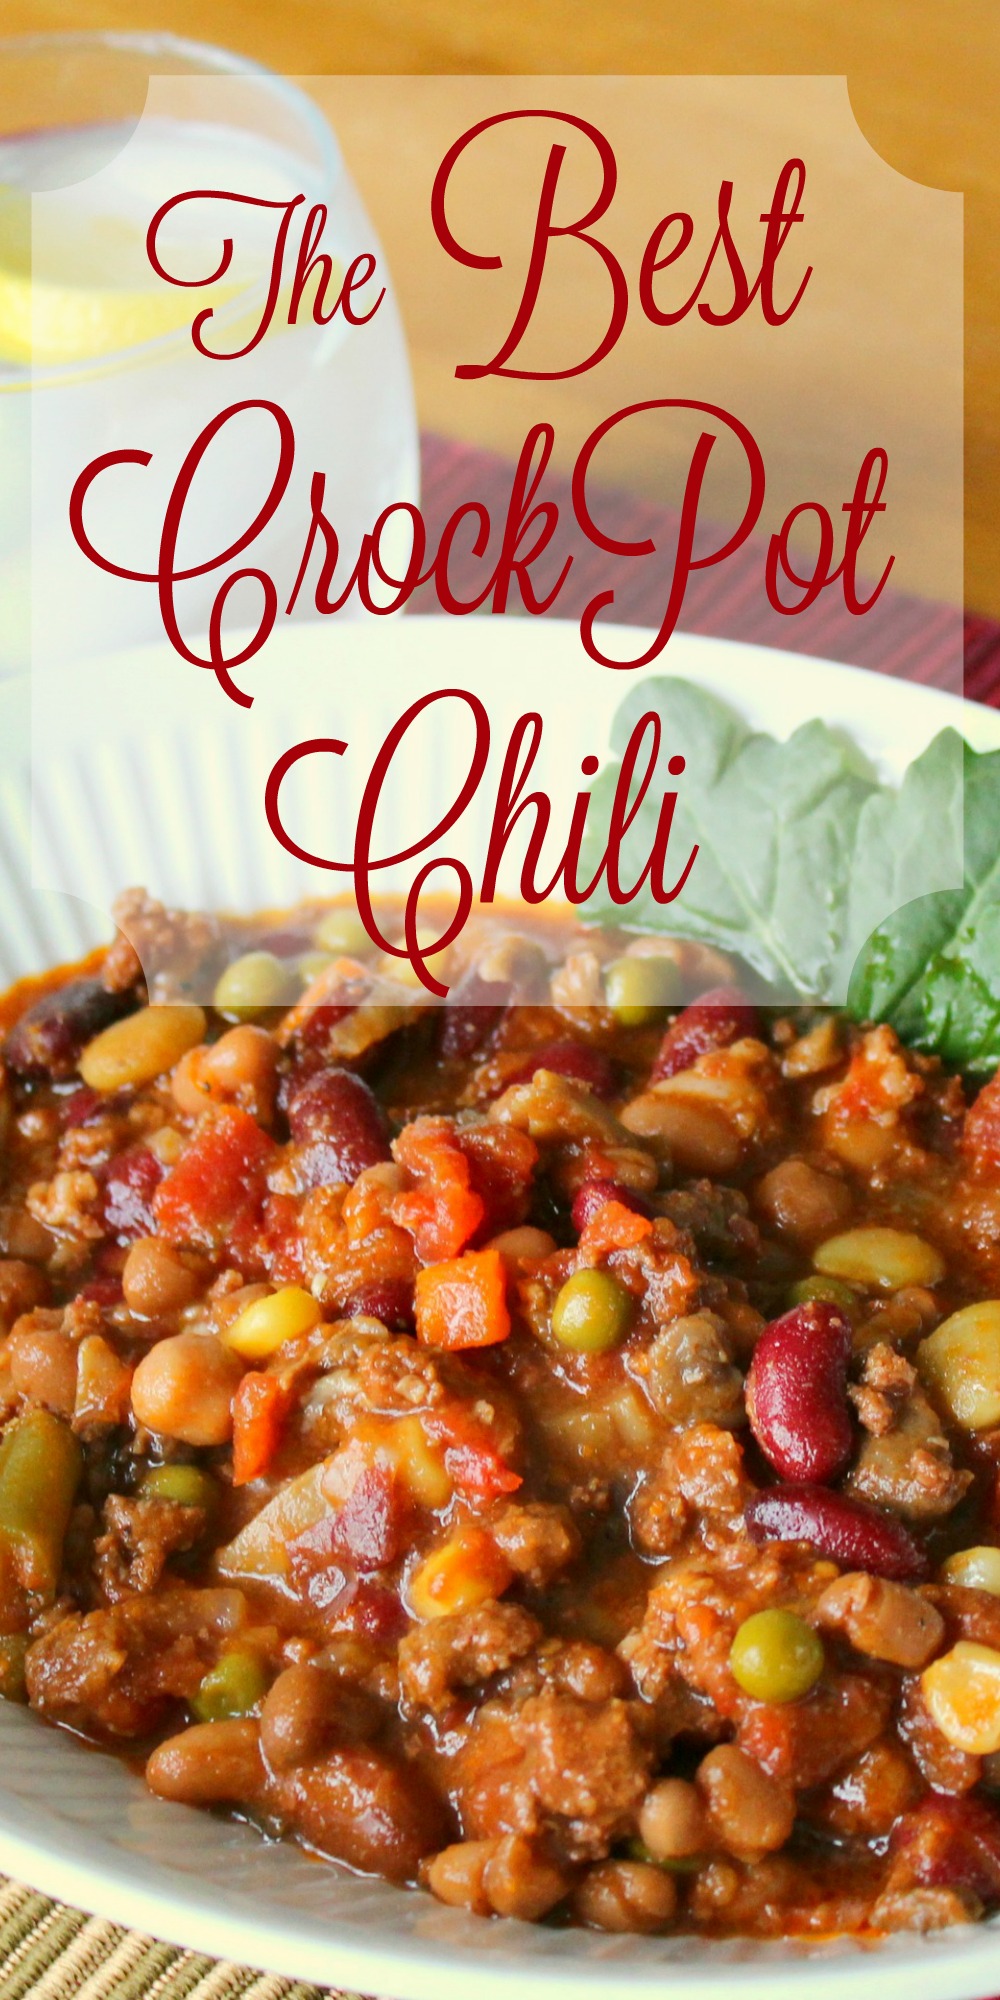 The Best Crock Pot Chili! - TheProjectPile.comTheProjectPile.com